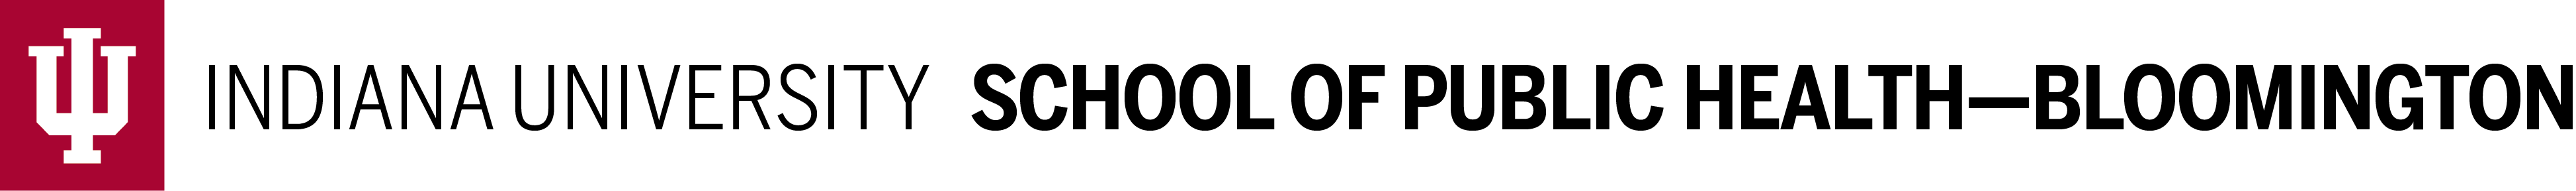 IU School of Public Health-Bloomington logo